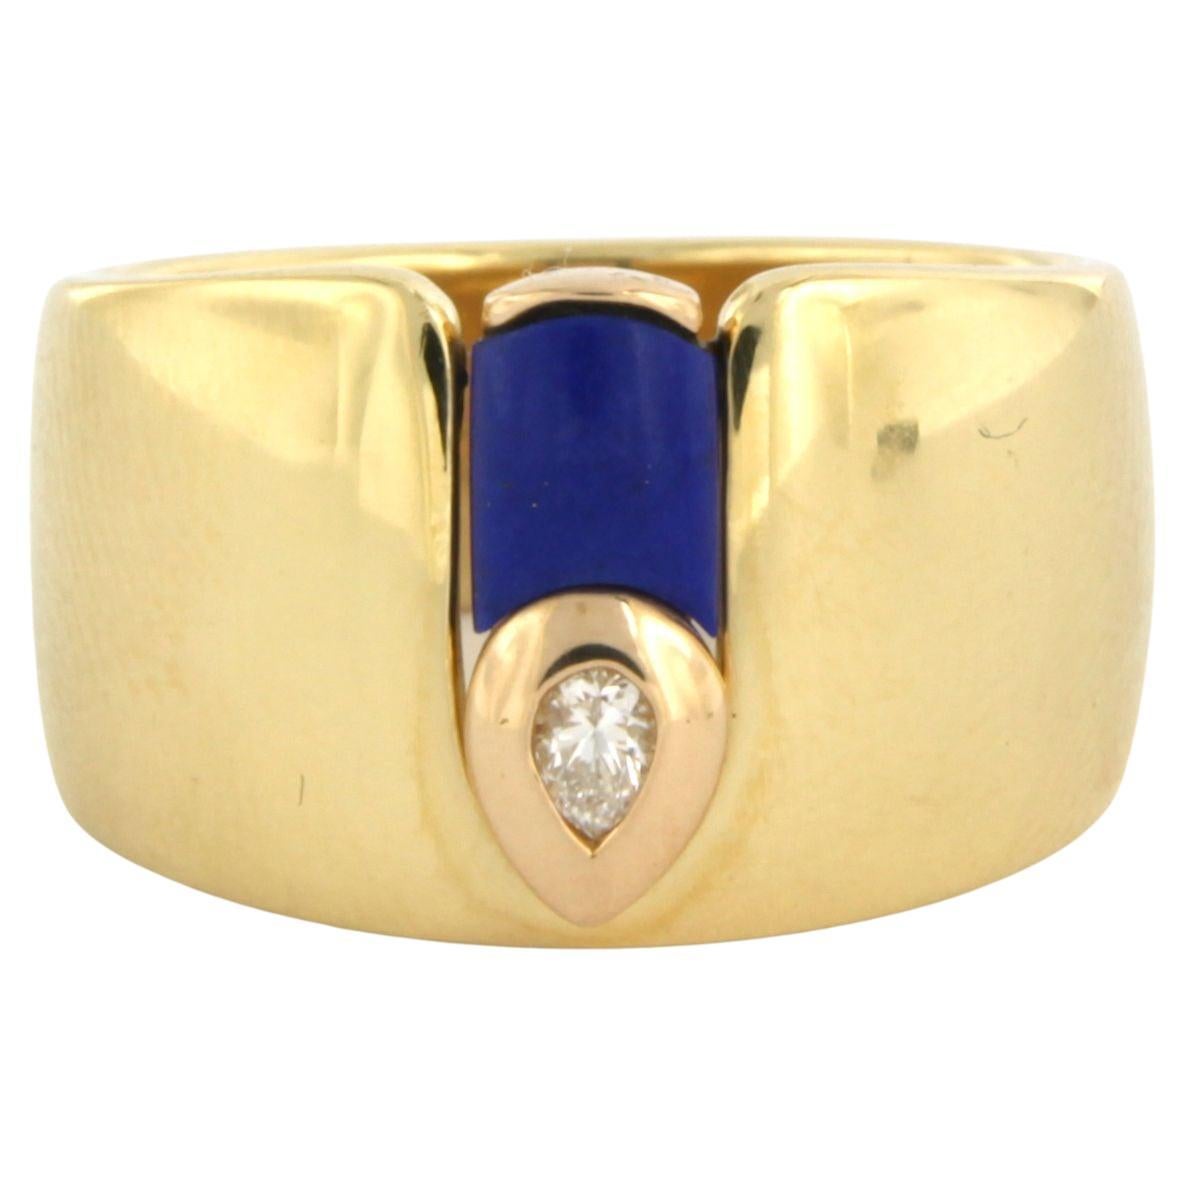 Ring with Lapis Lazuli and Diamond 18k yellow gold